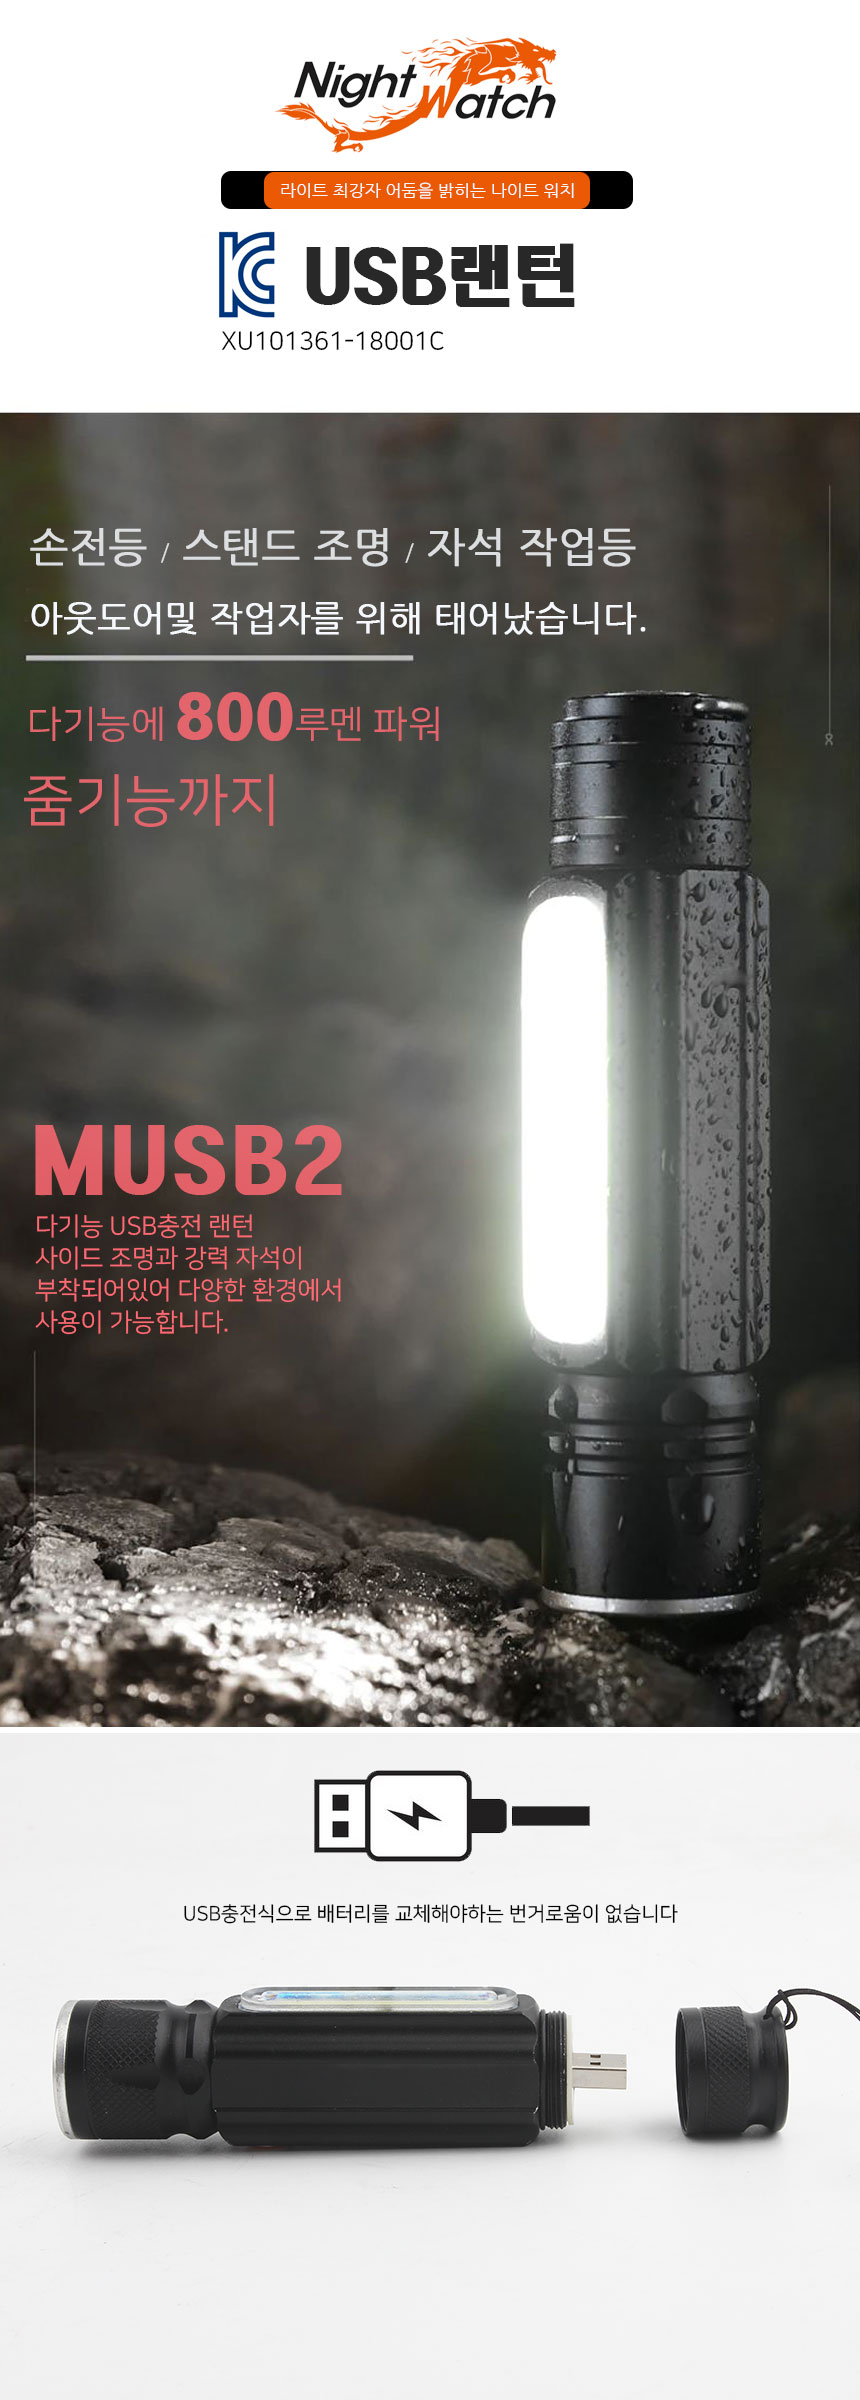 MUSB2-1.jpg